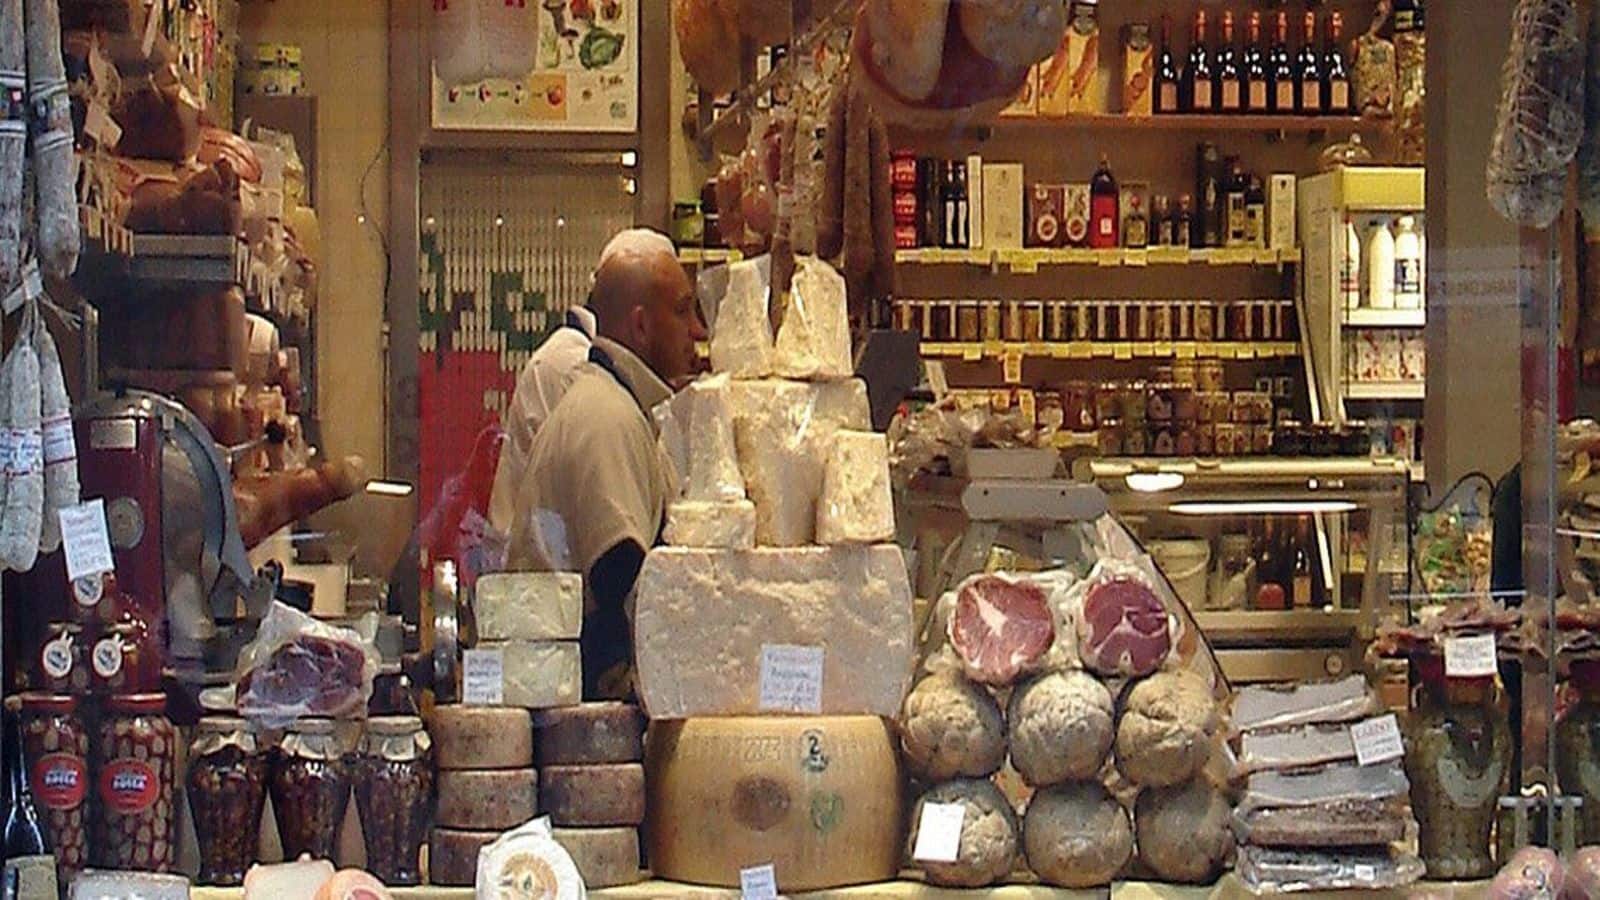 Emilia-Romagna is Italy's gastronomic heartland